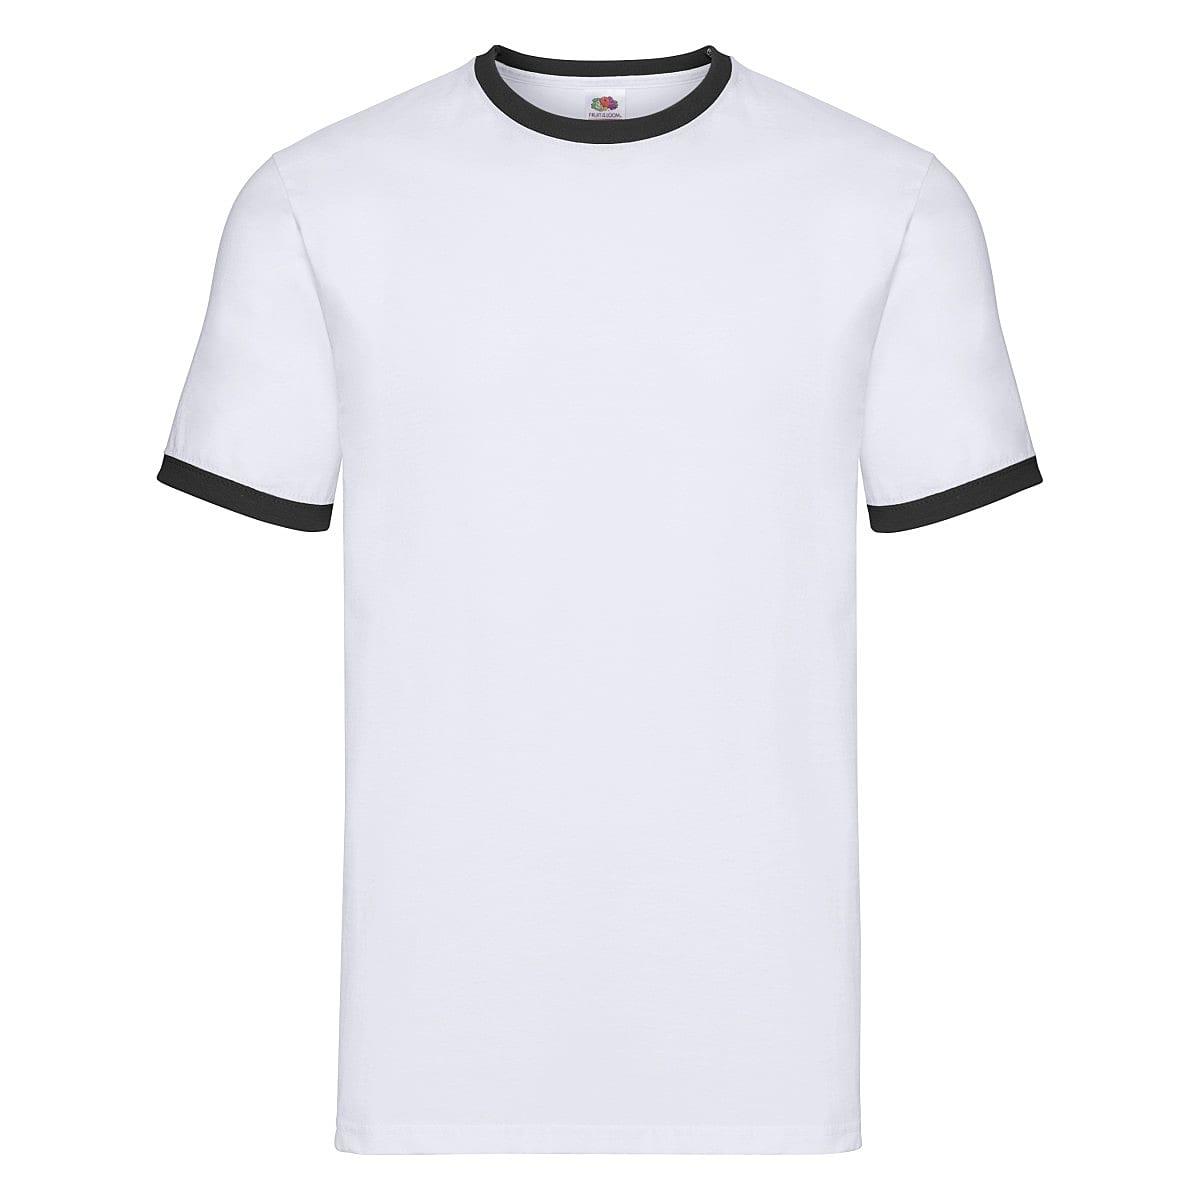 Fruit Of The Loom Ringer T-Shirt in White / Black (Product Code: 61168)